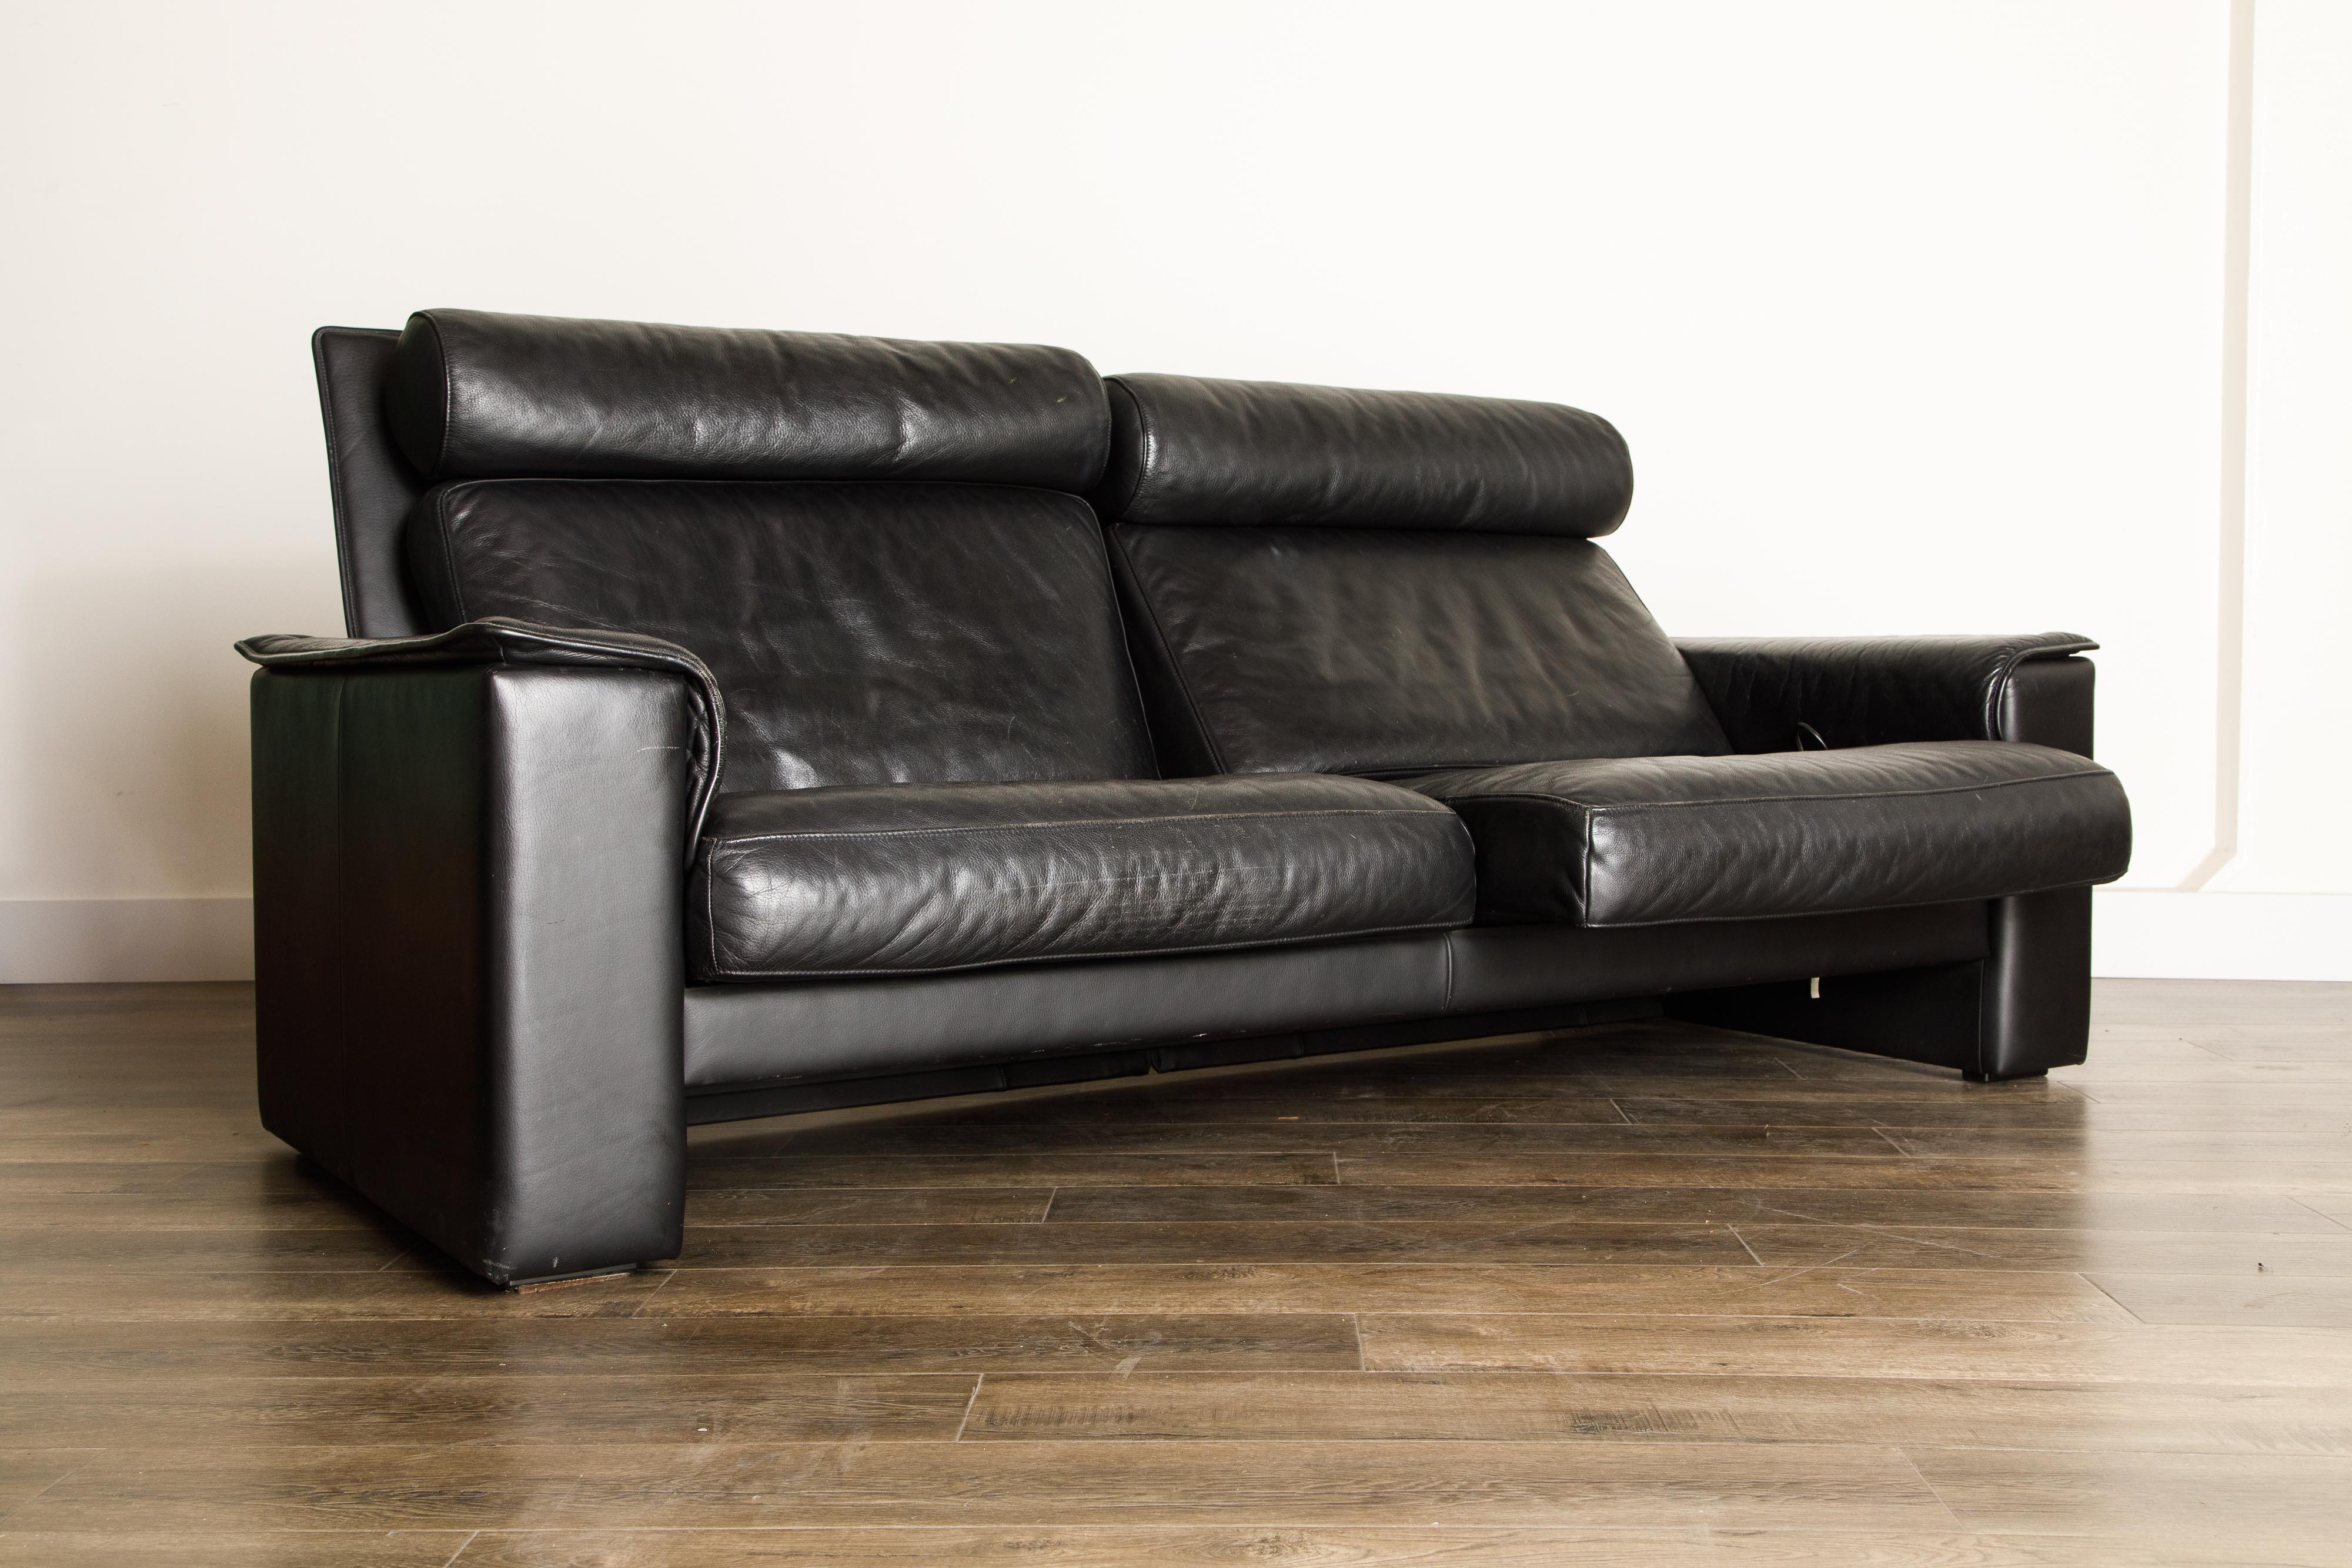 De Sede Aged Black Leather Recliner Loveseat Sofa, 1970s Switzerland, Signed 1